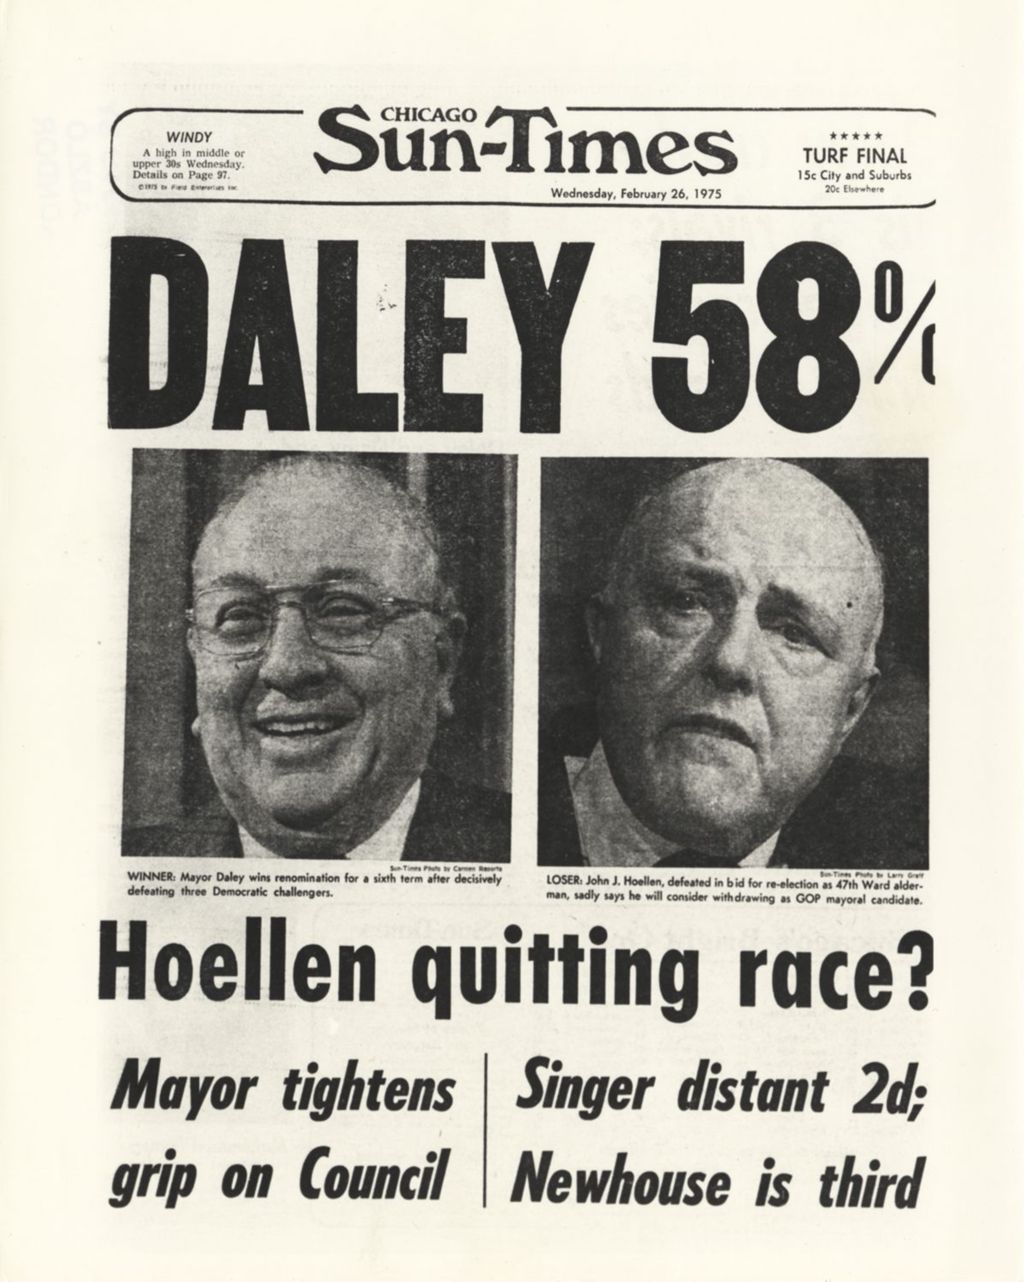 Chicago Sun-Times headline "Daley 58%"